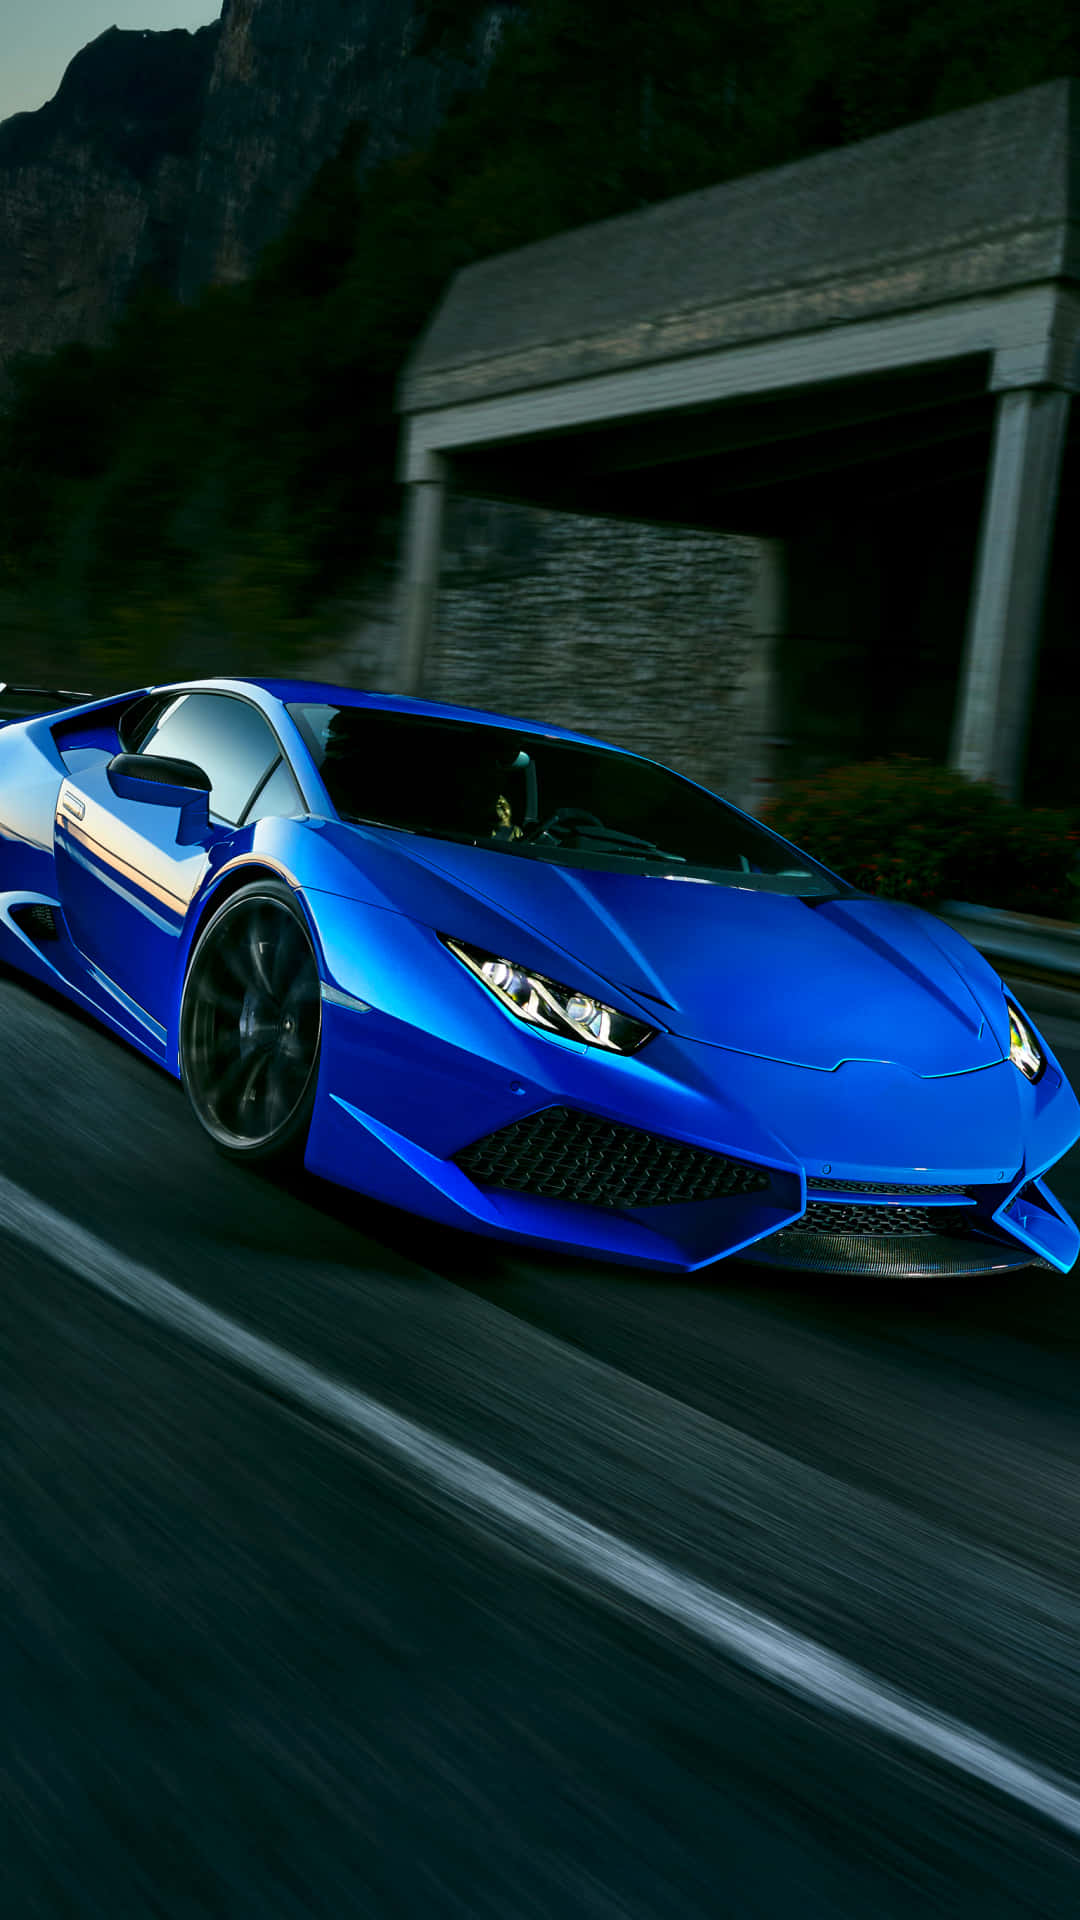 The blue Lamborghini drive giving the thrill of luxury Wallpaper